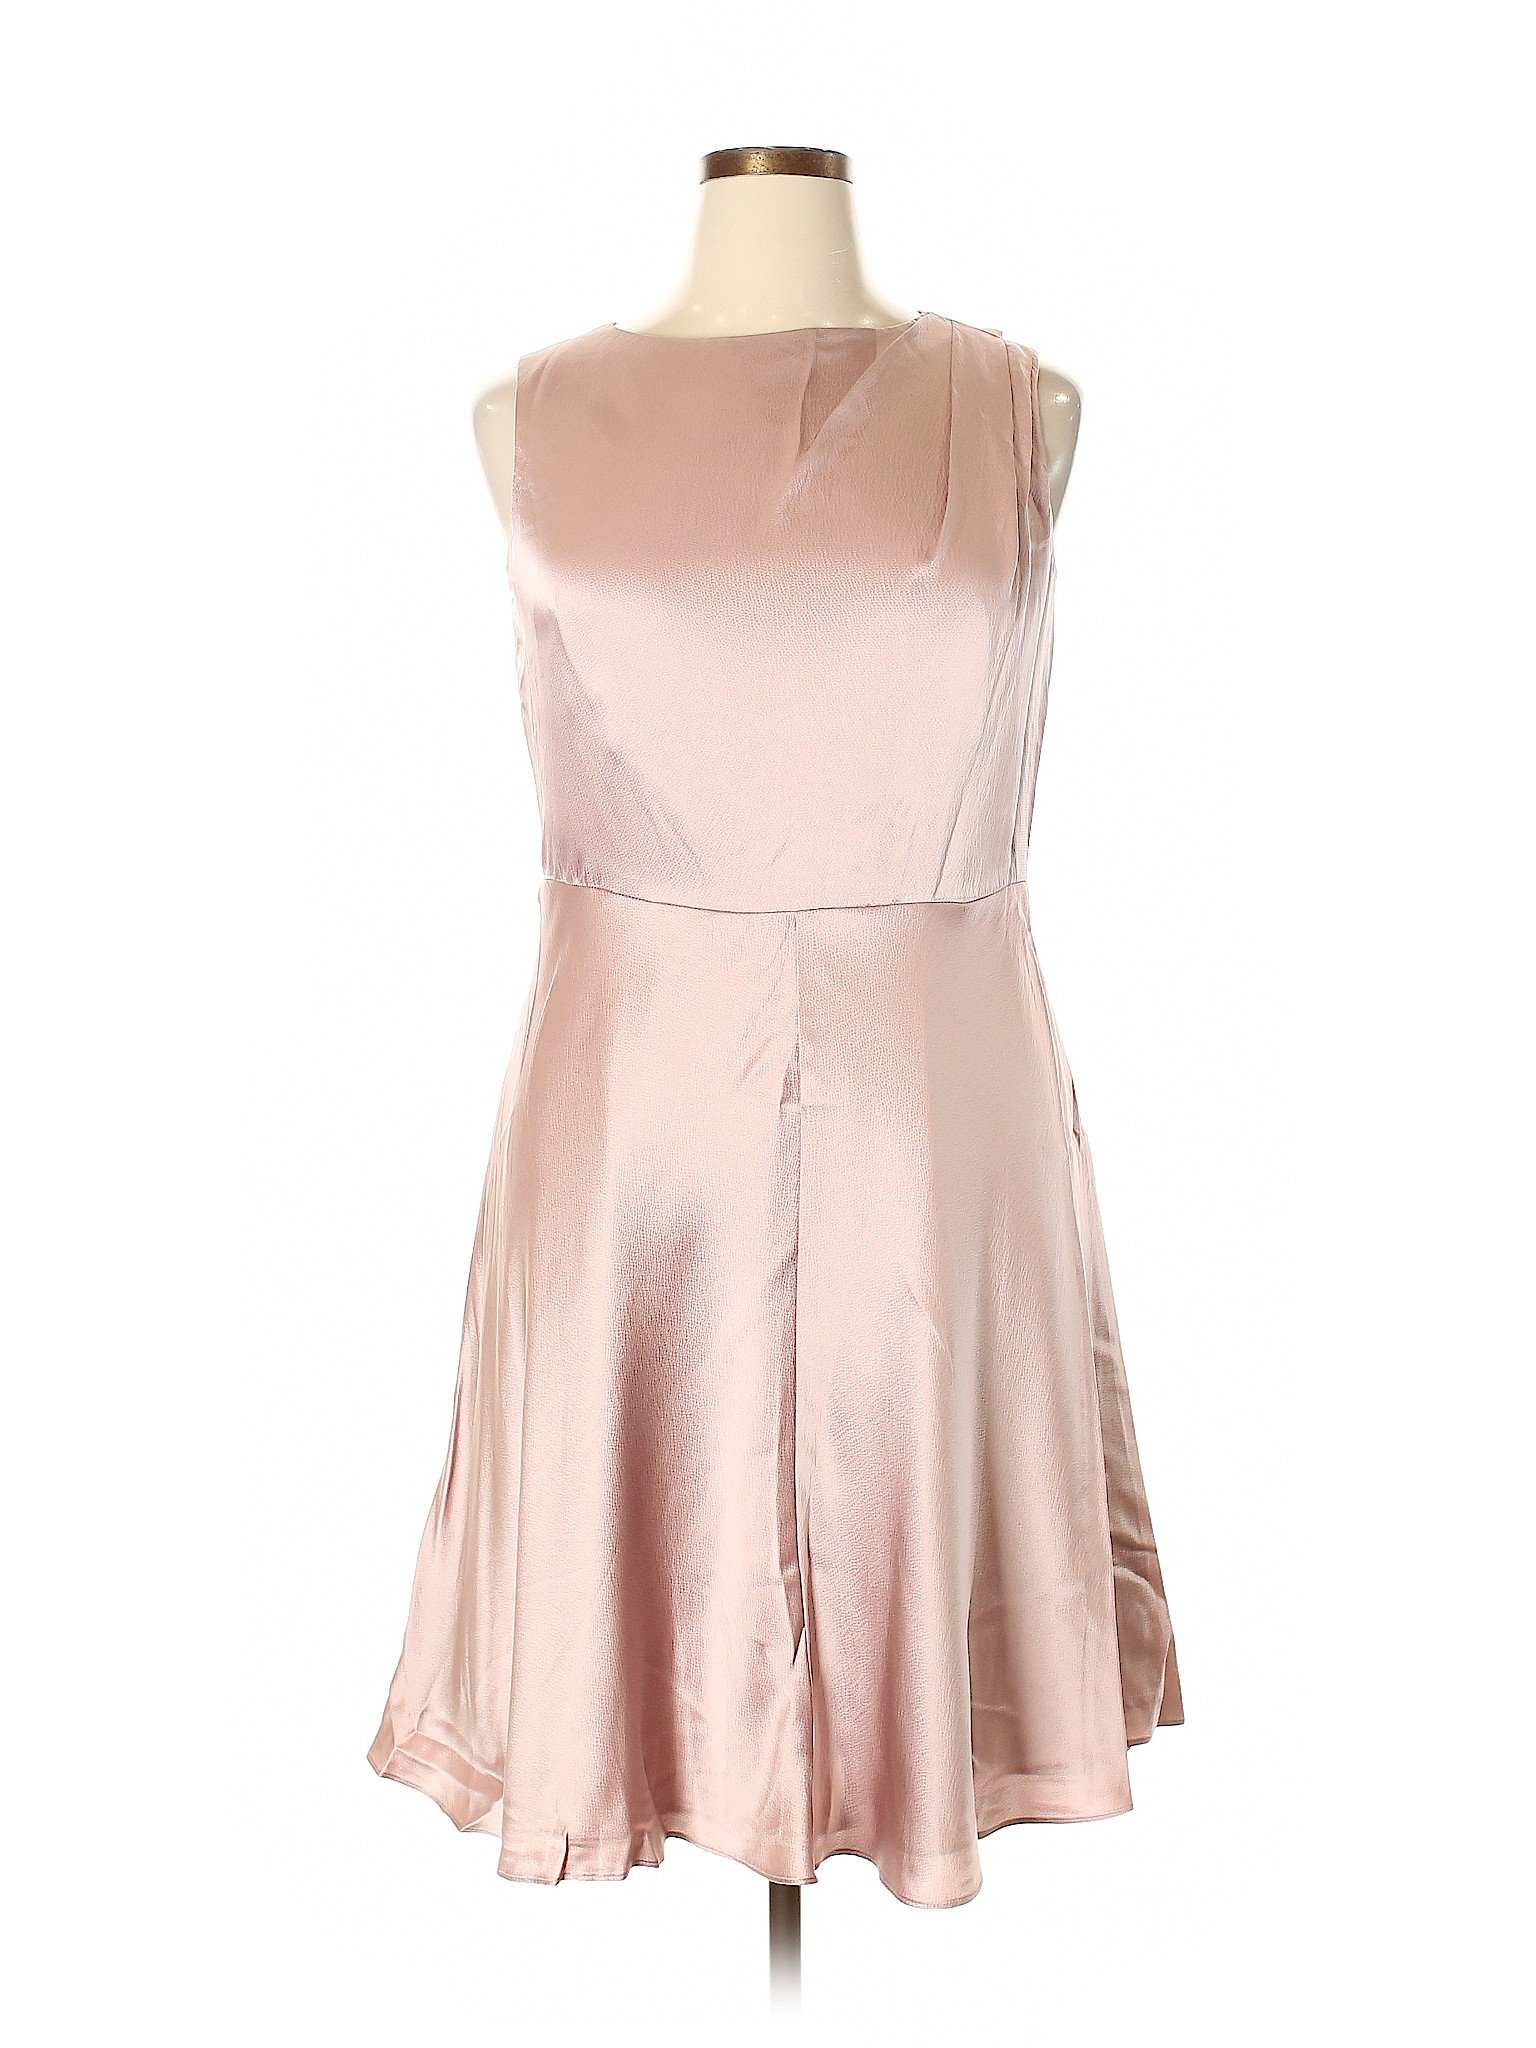 Talbots 100% Silk Solid Light Pink Cocktail Dress Size 14 (Petite) - 89 ...